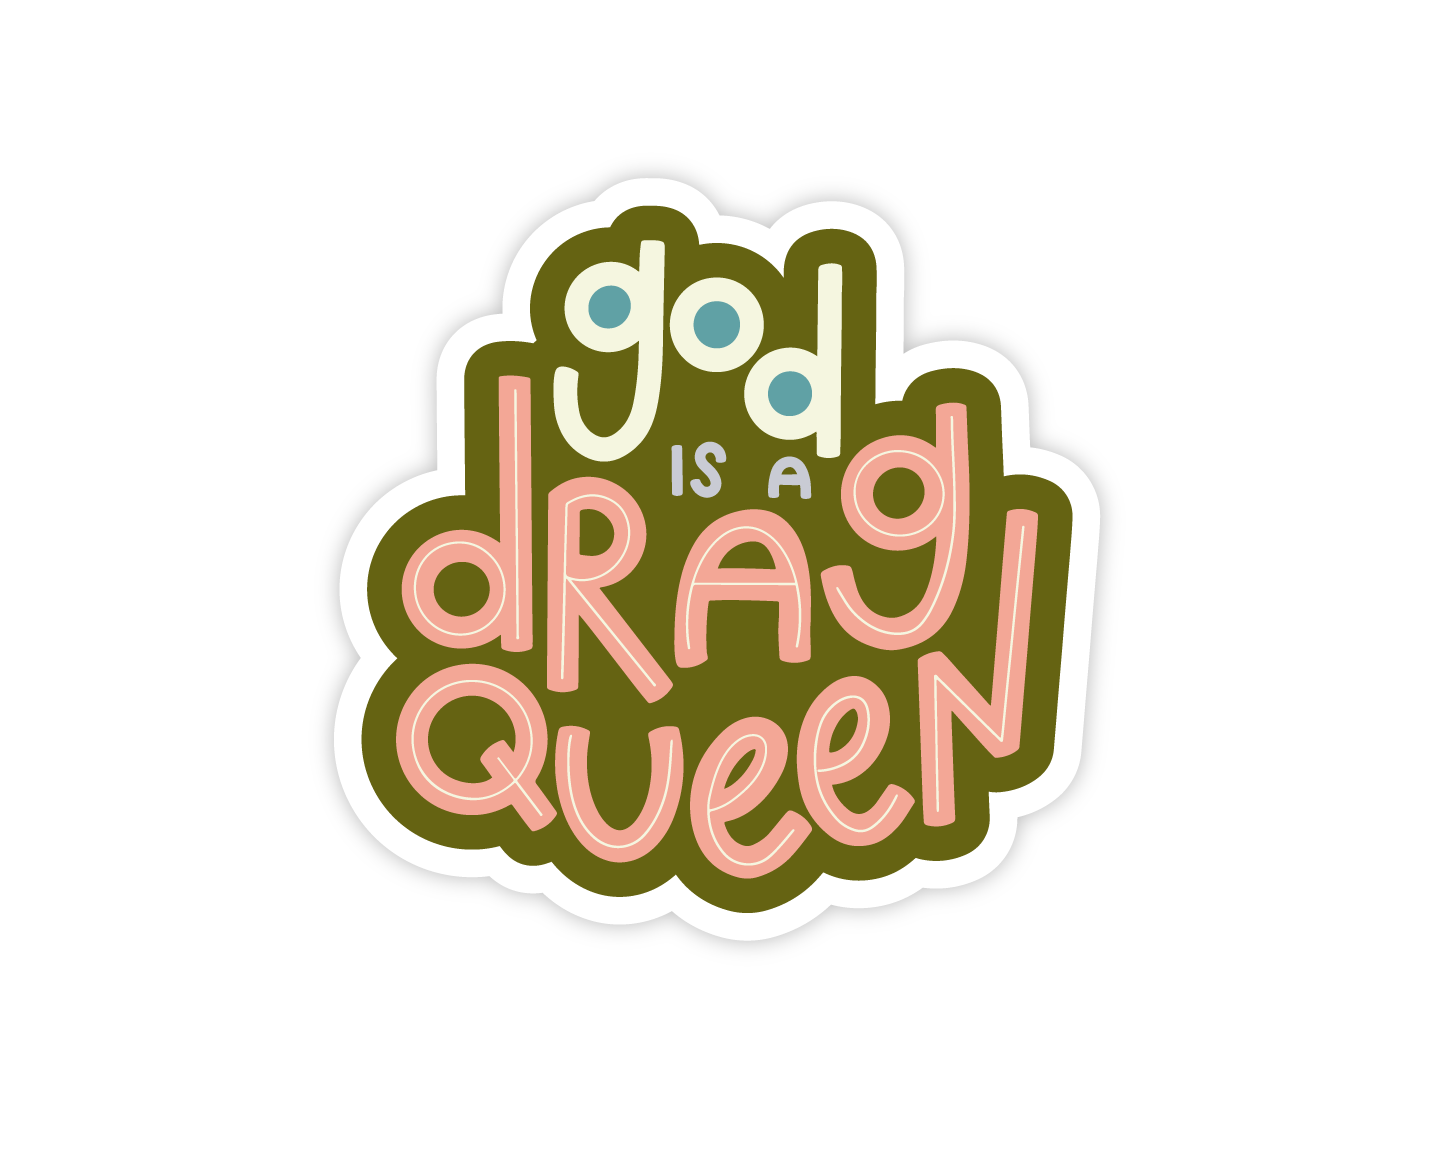 God is a Drag Queen